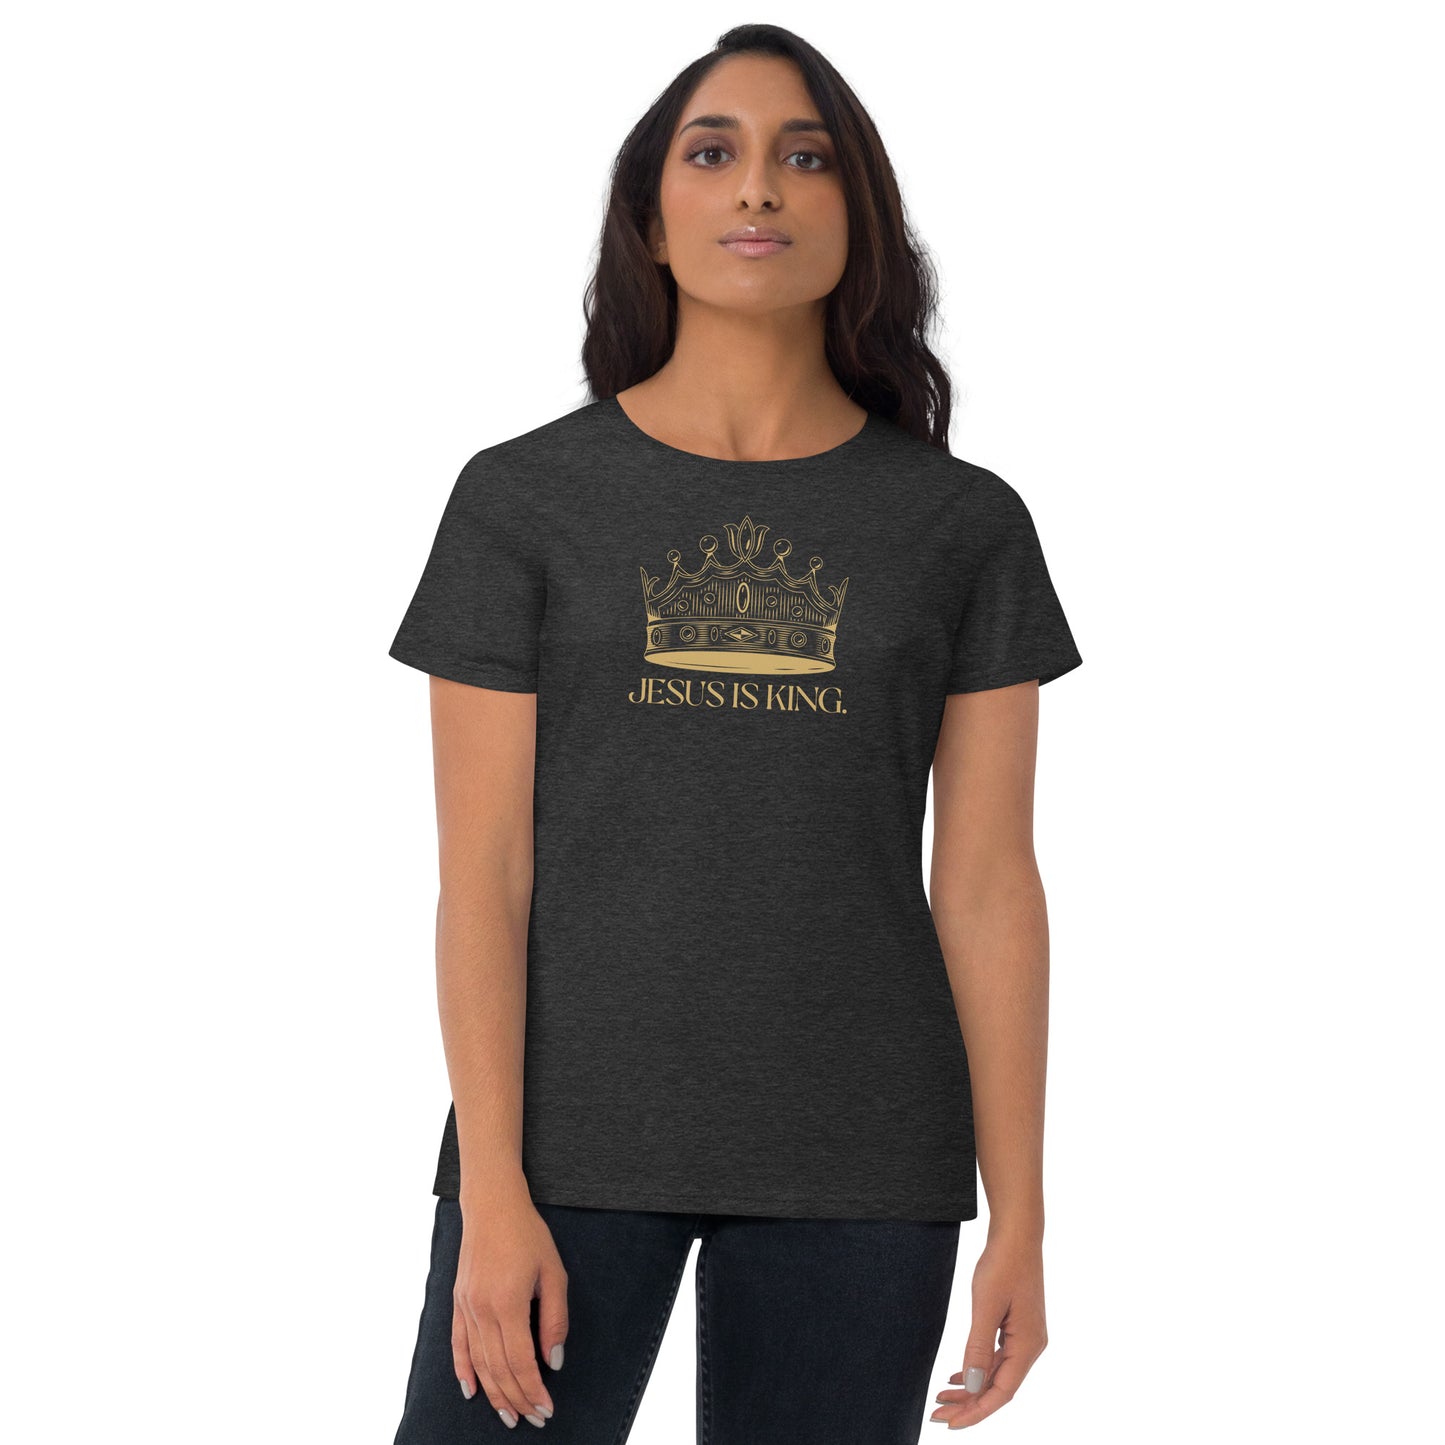 Jesus is KING - 3.0 - NEW - Women's short sleeve t-shirt